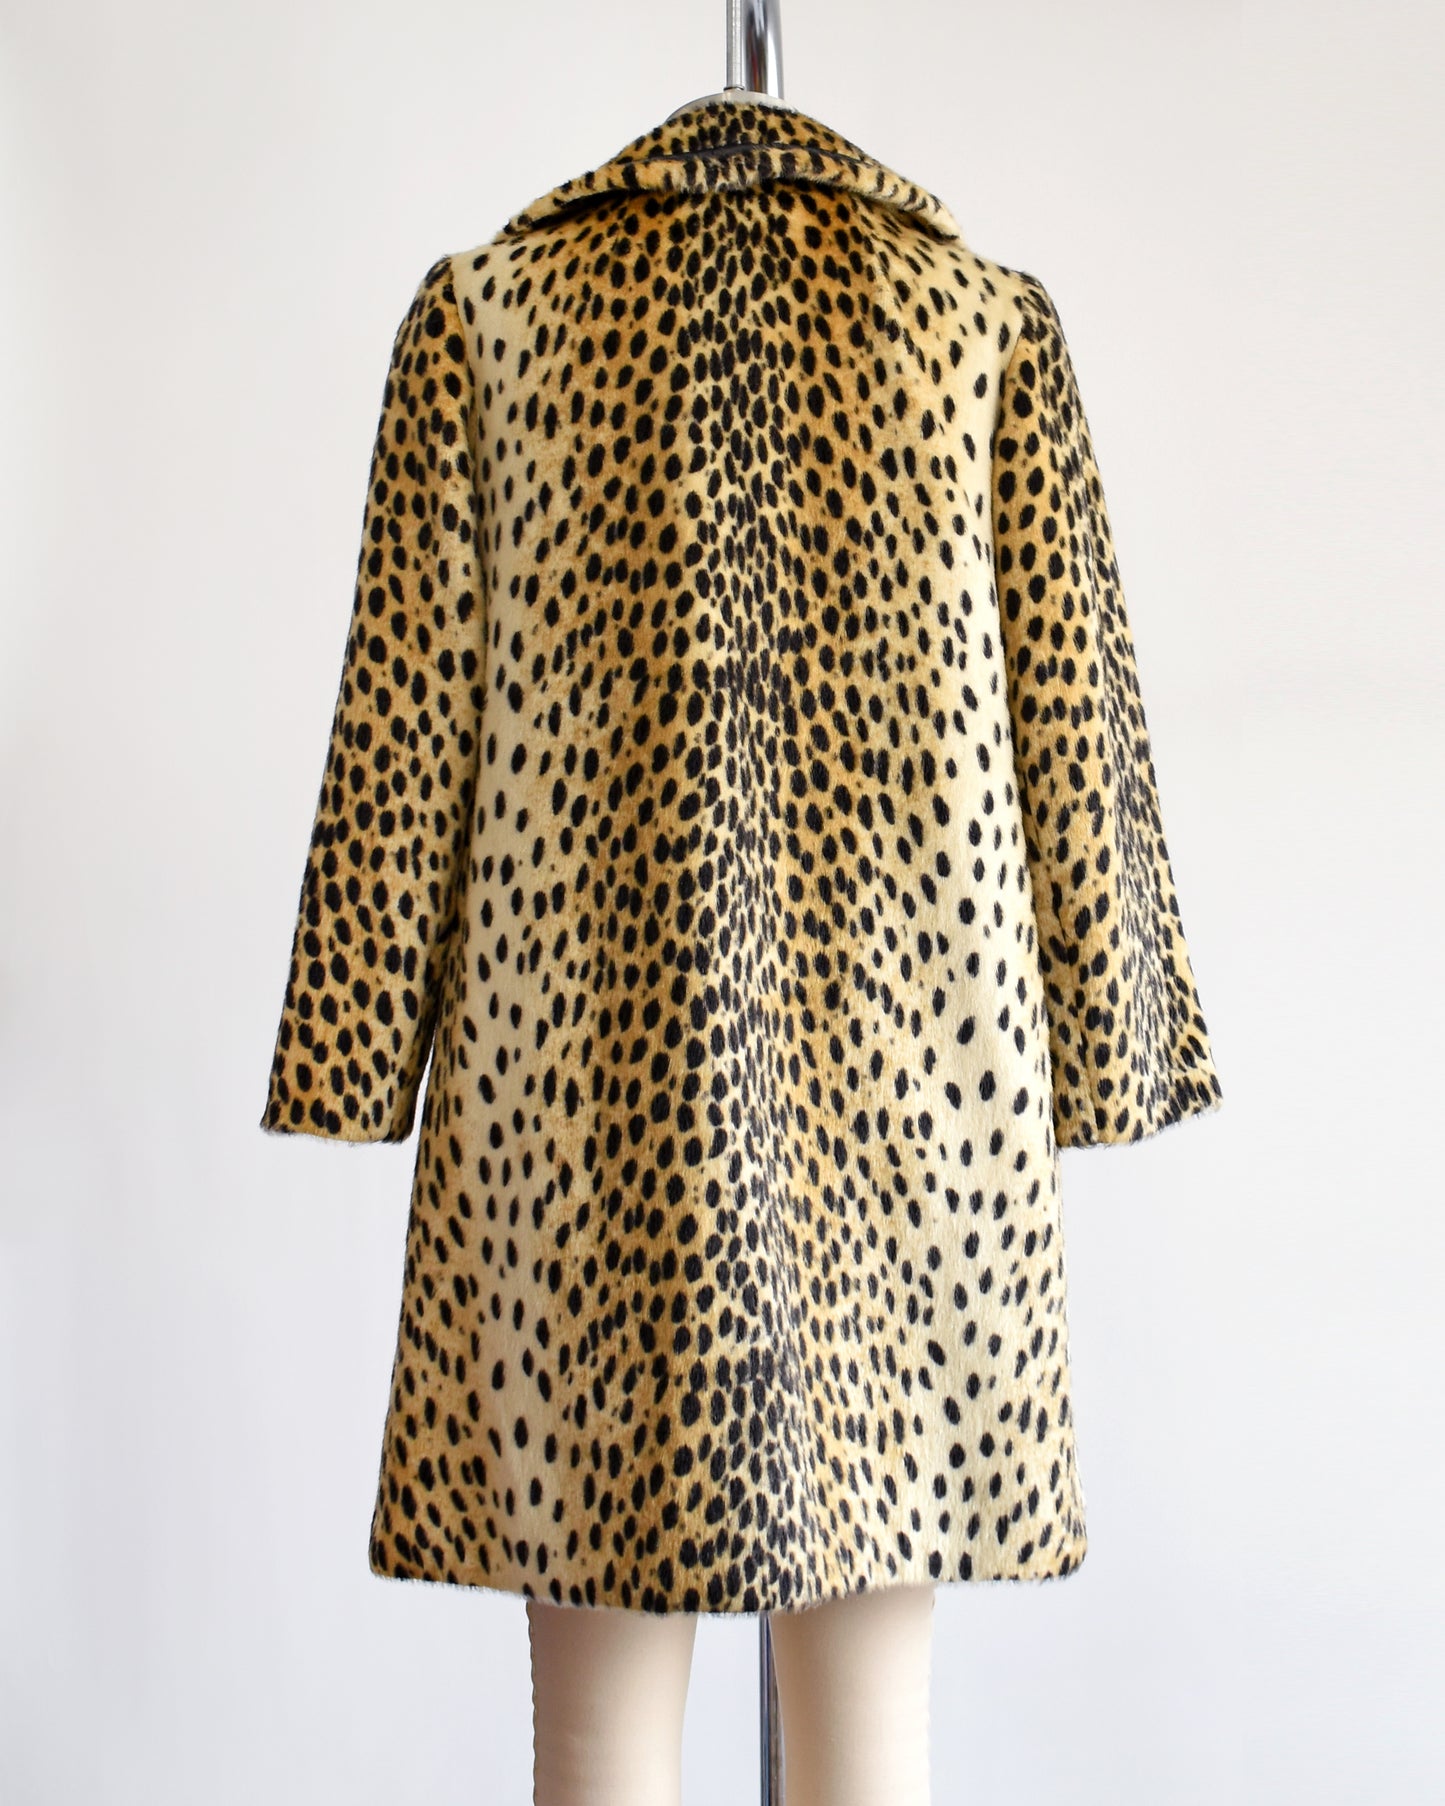 Back view of a faux fur cheetah print coat features golden faux fur with black spots and black faux leather trim